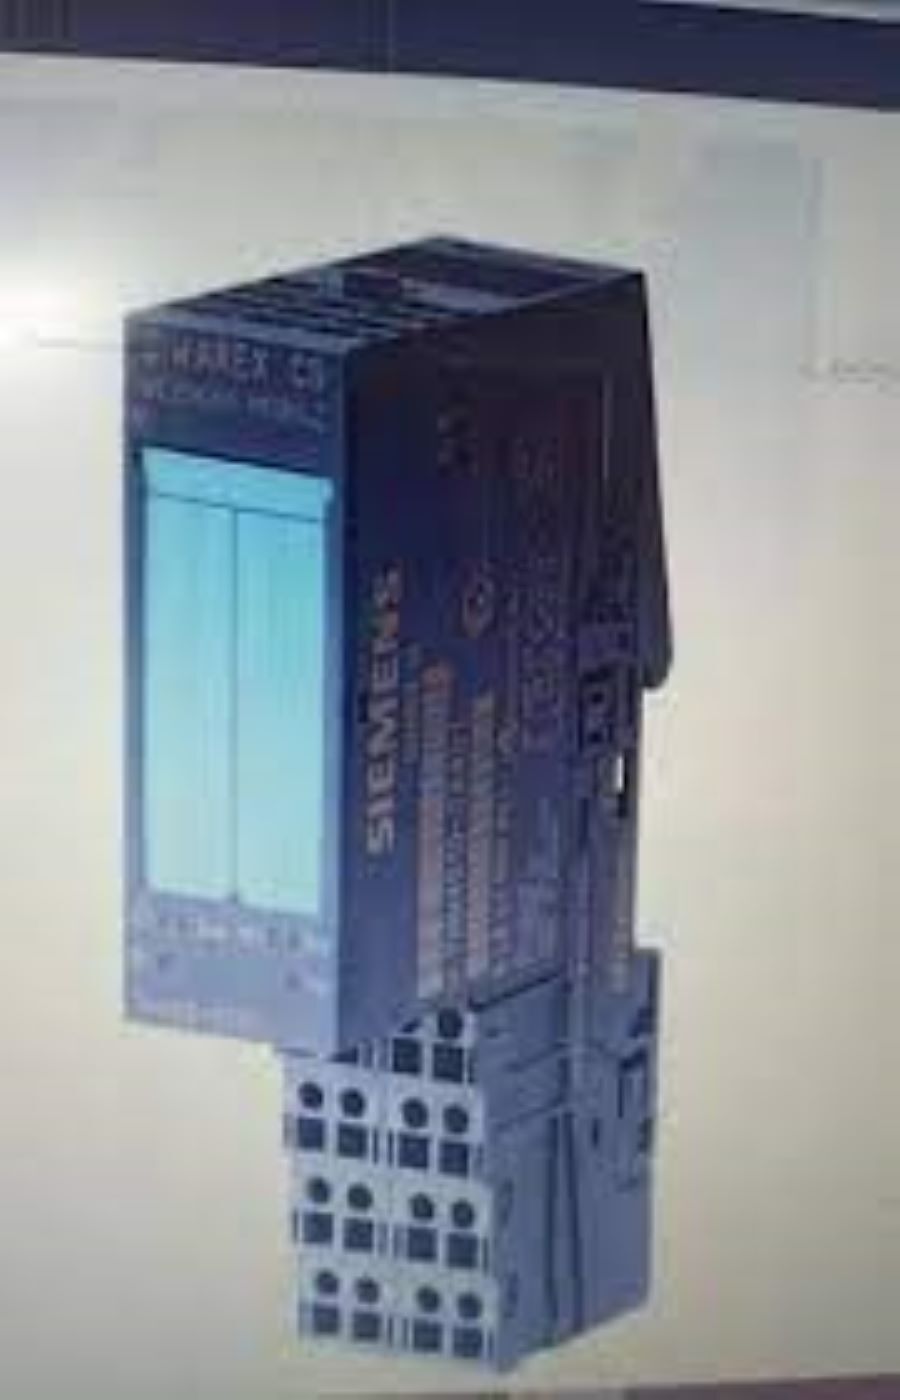 7MH4910-0AA01-siemens programmable logic controller